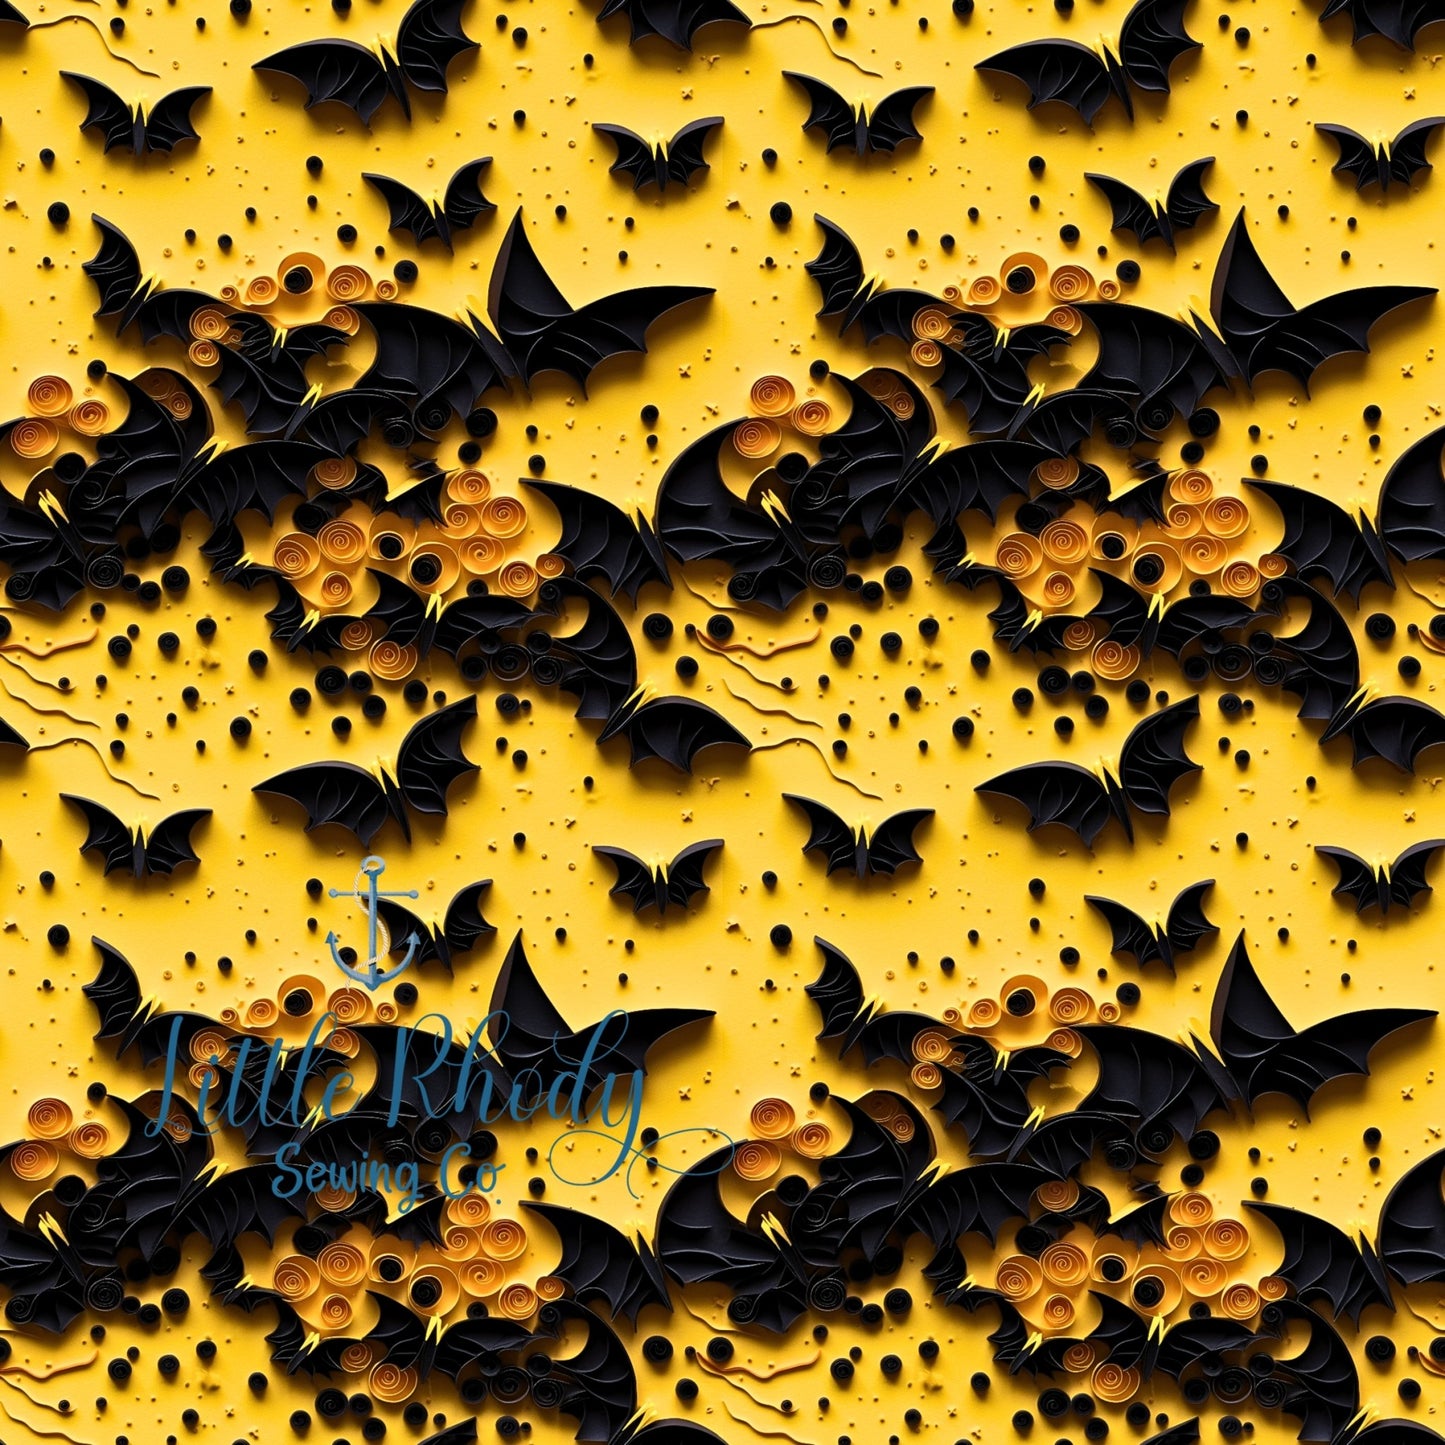 Bonnie's Boujee Designs - Halloween Bats on Moon Yellow - Little Rhody Sewing Co.